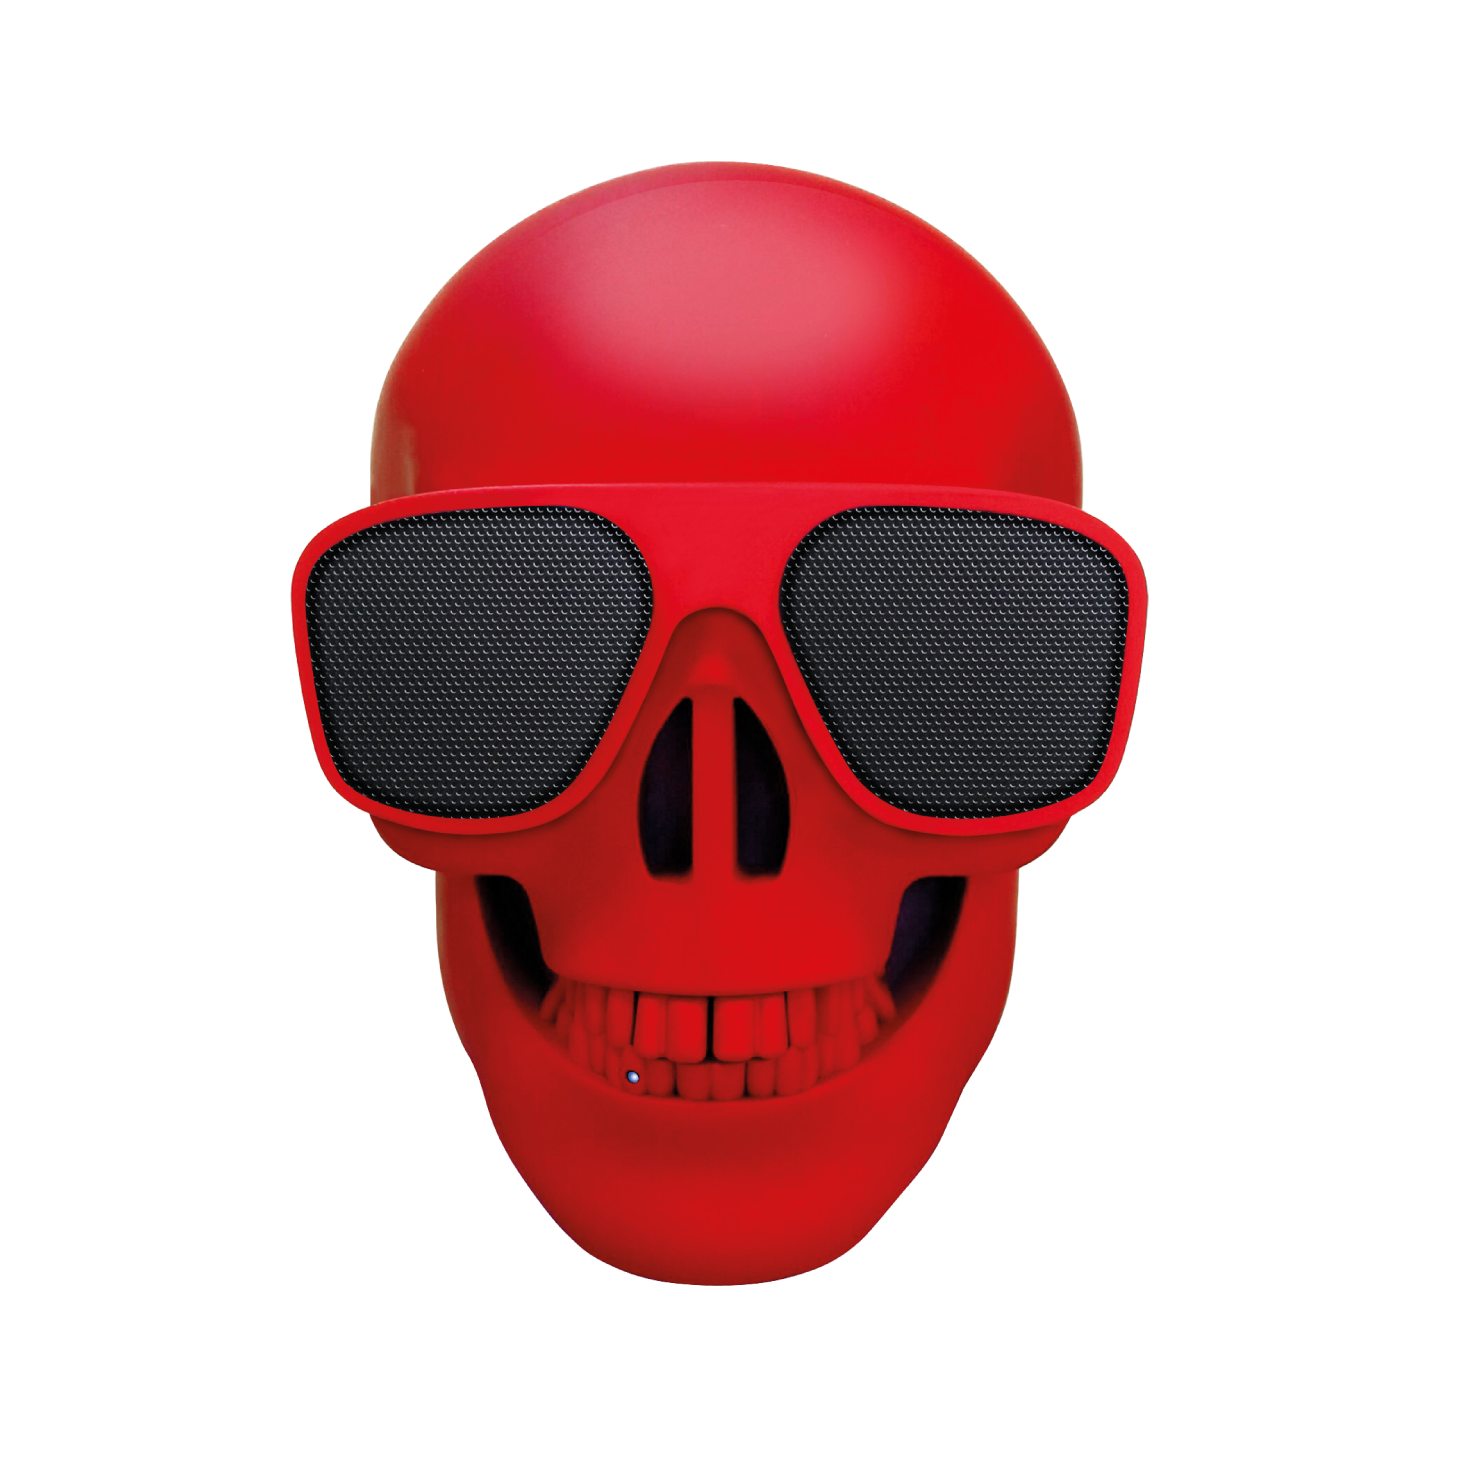 Air Muerto | Desktop Portable Skull TWS Capable | Bluetooth 5.0 | SWAY